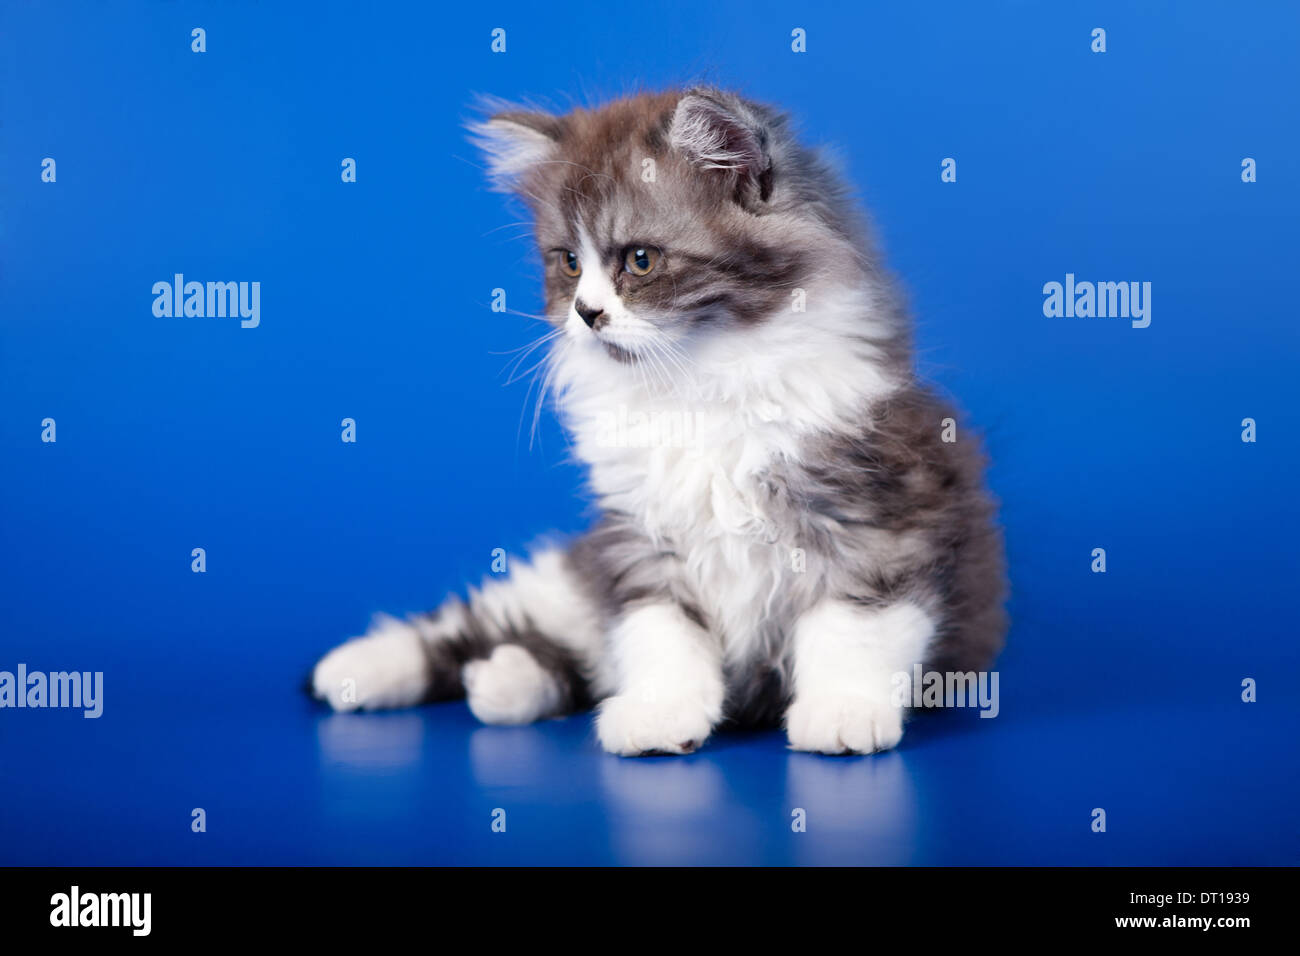 Scottish purebred cat sitting on blue background Stock Photo